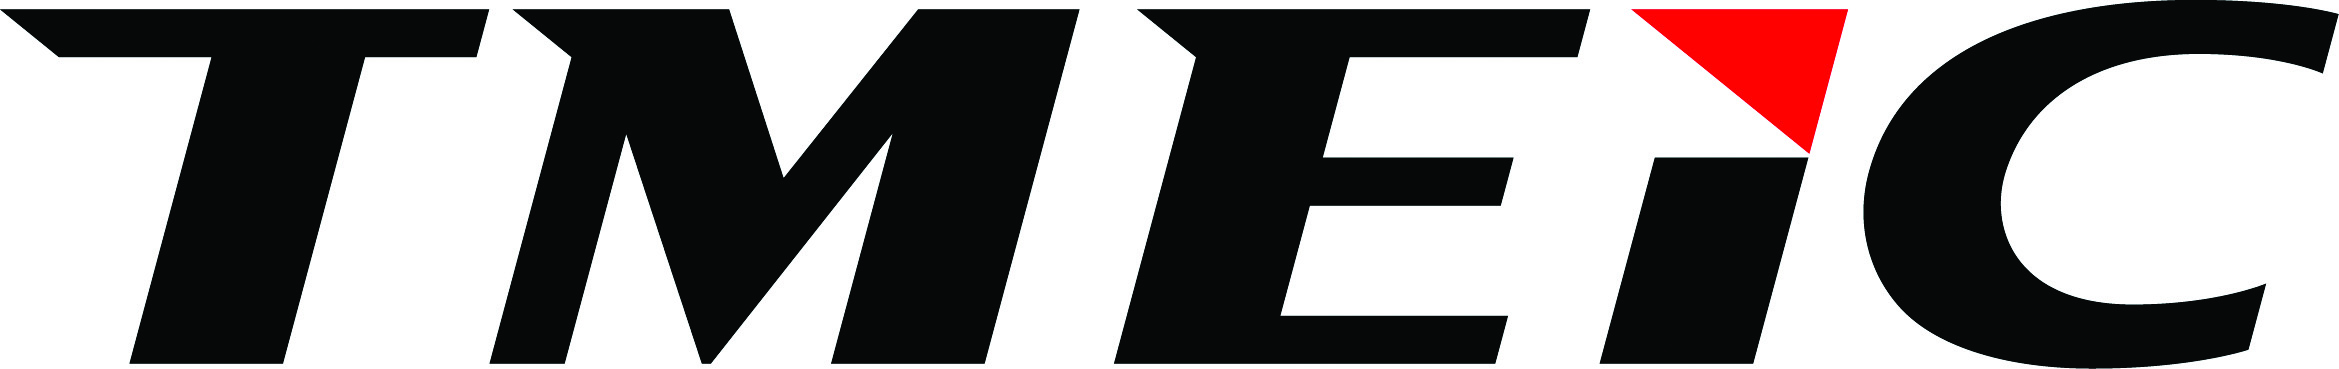 TMEIC Logo (1)